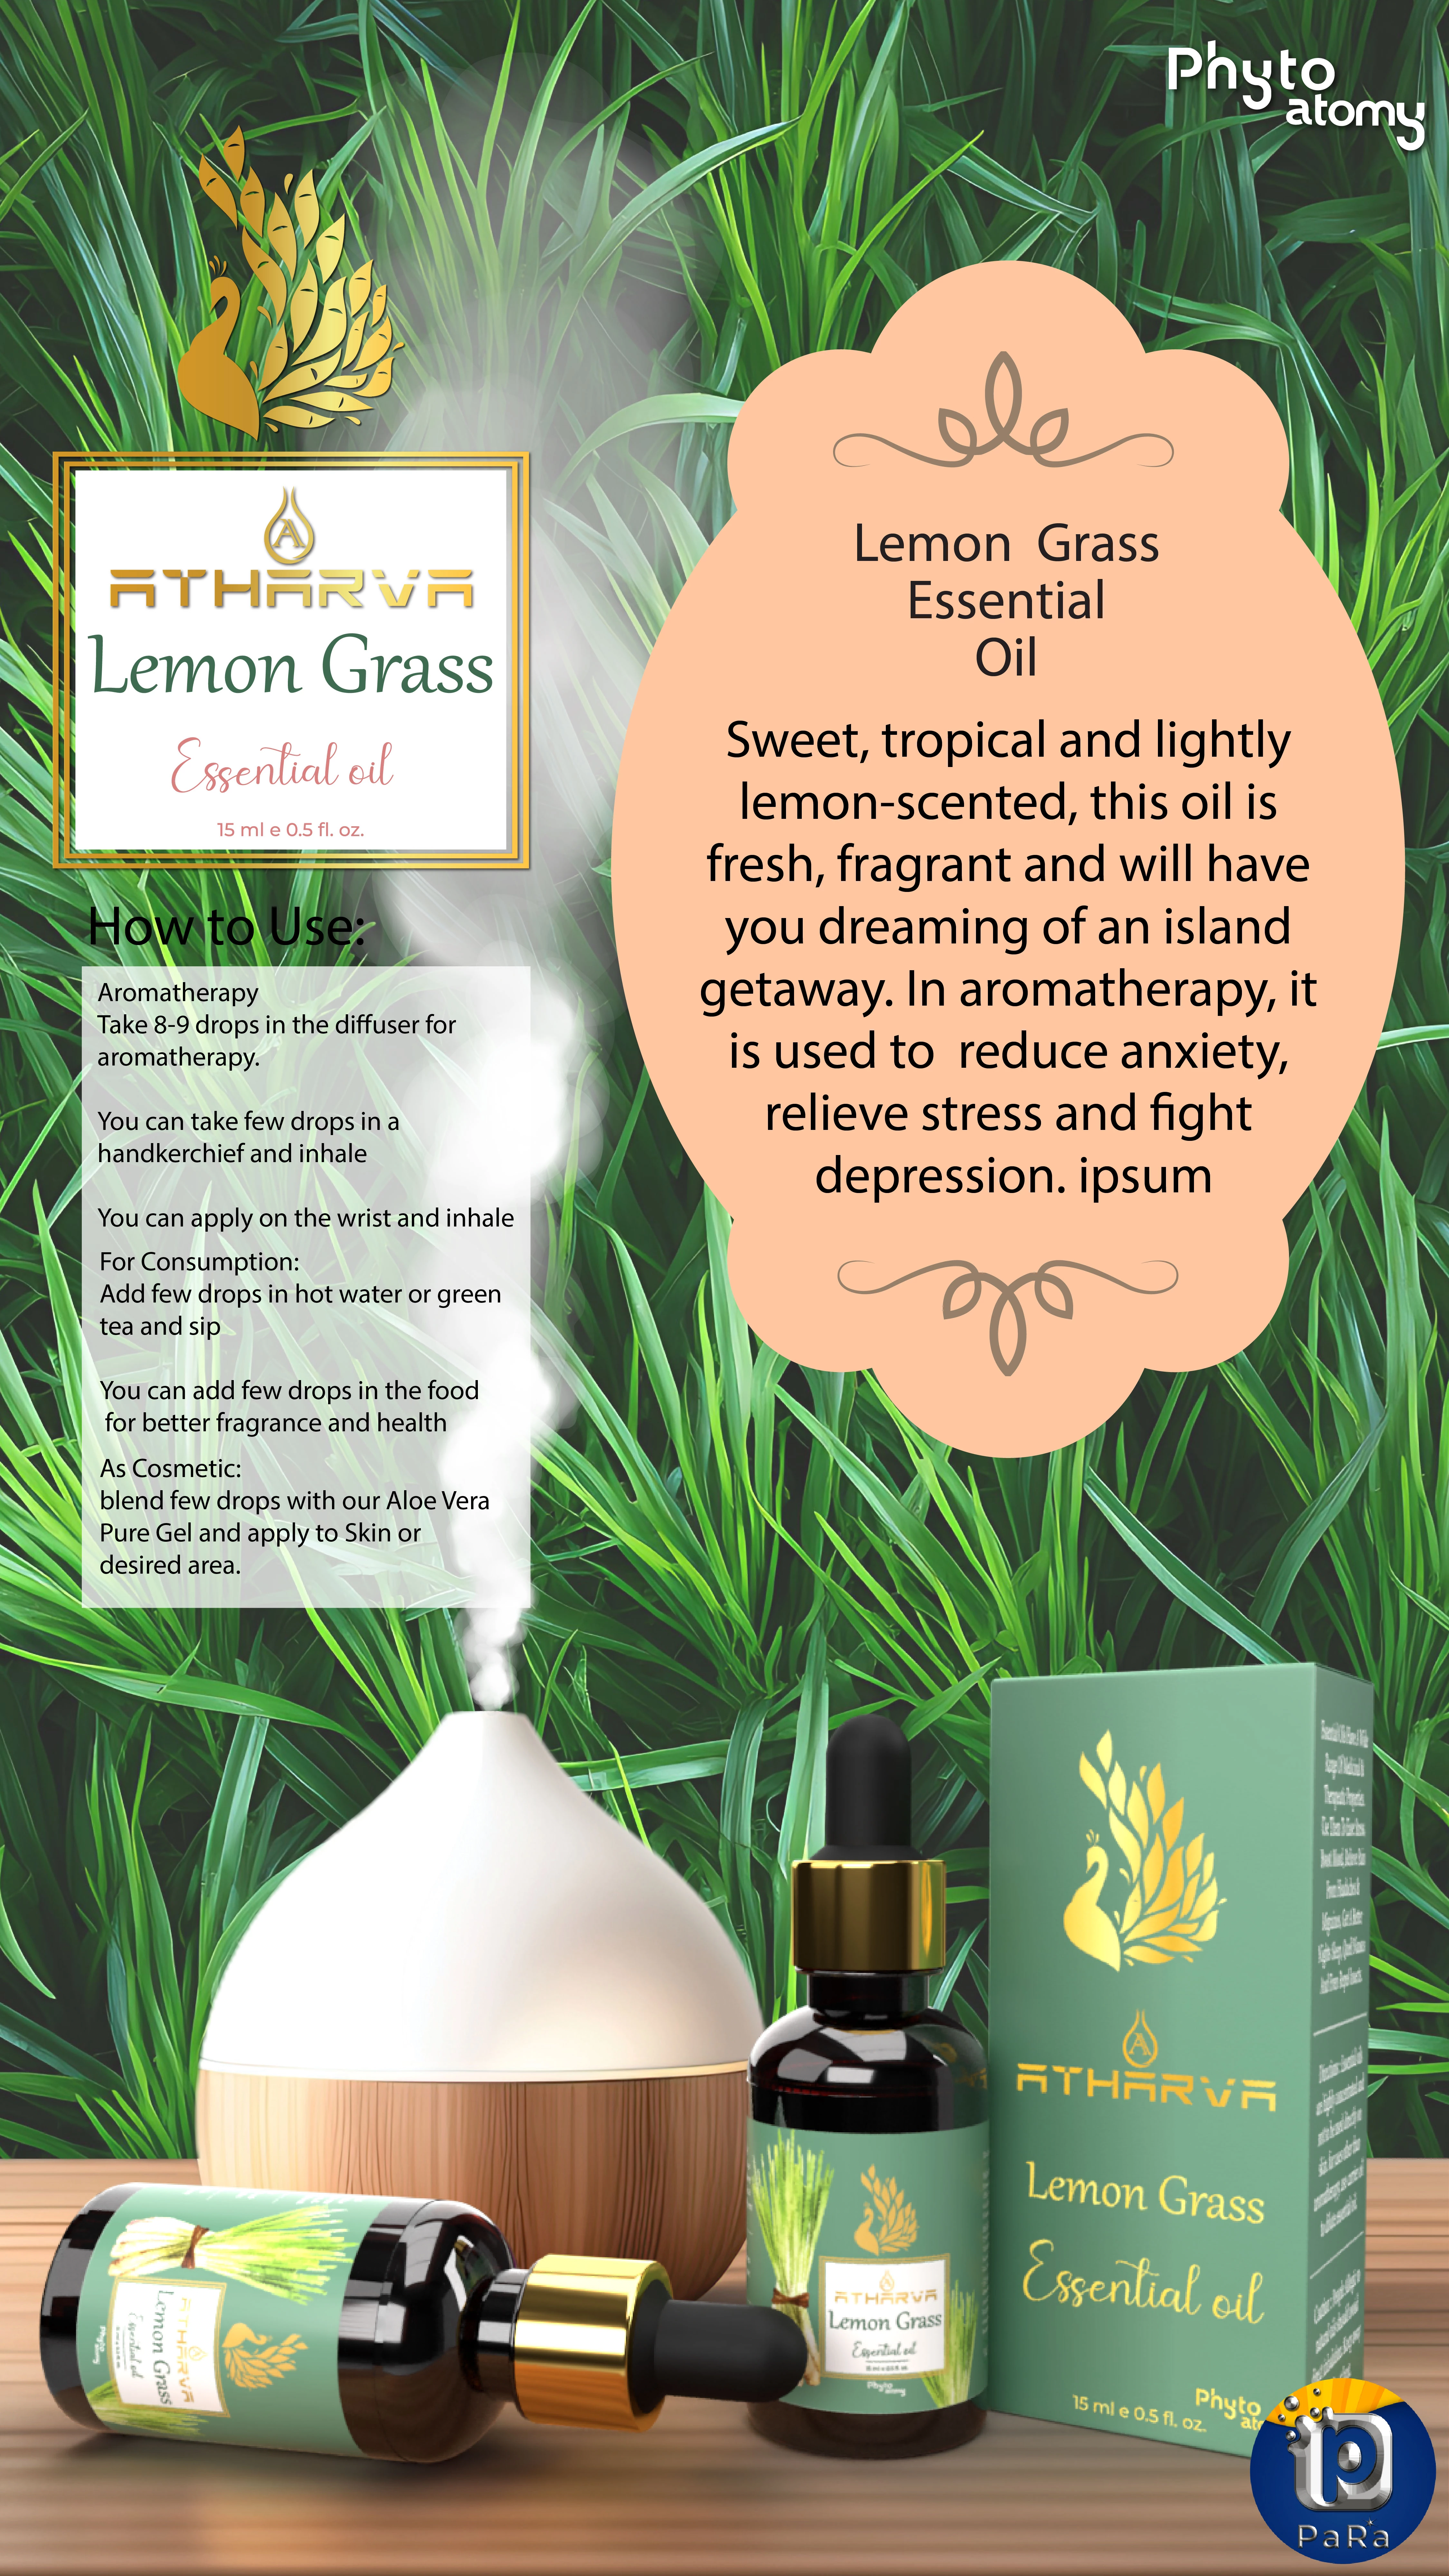 RBV B2B Atharva Lemon Grass Essential Oil (15ml)-12 Pcs.